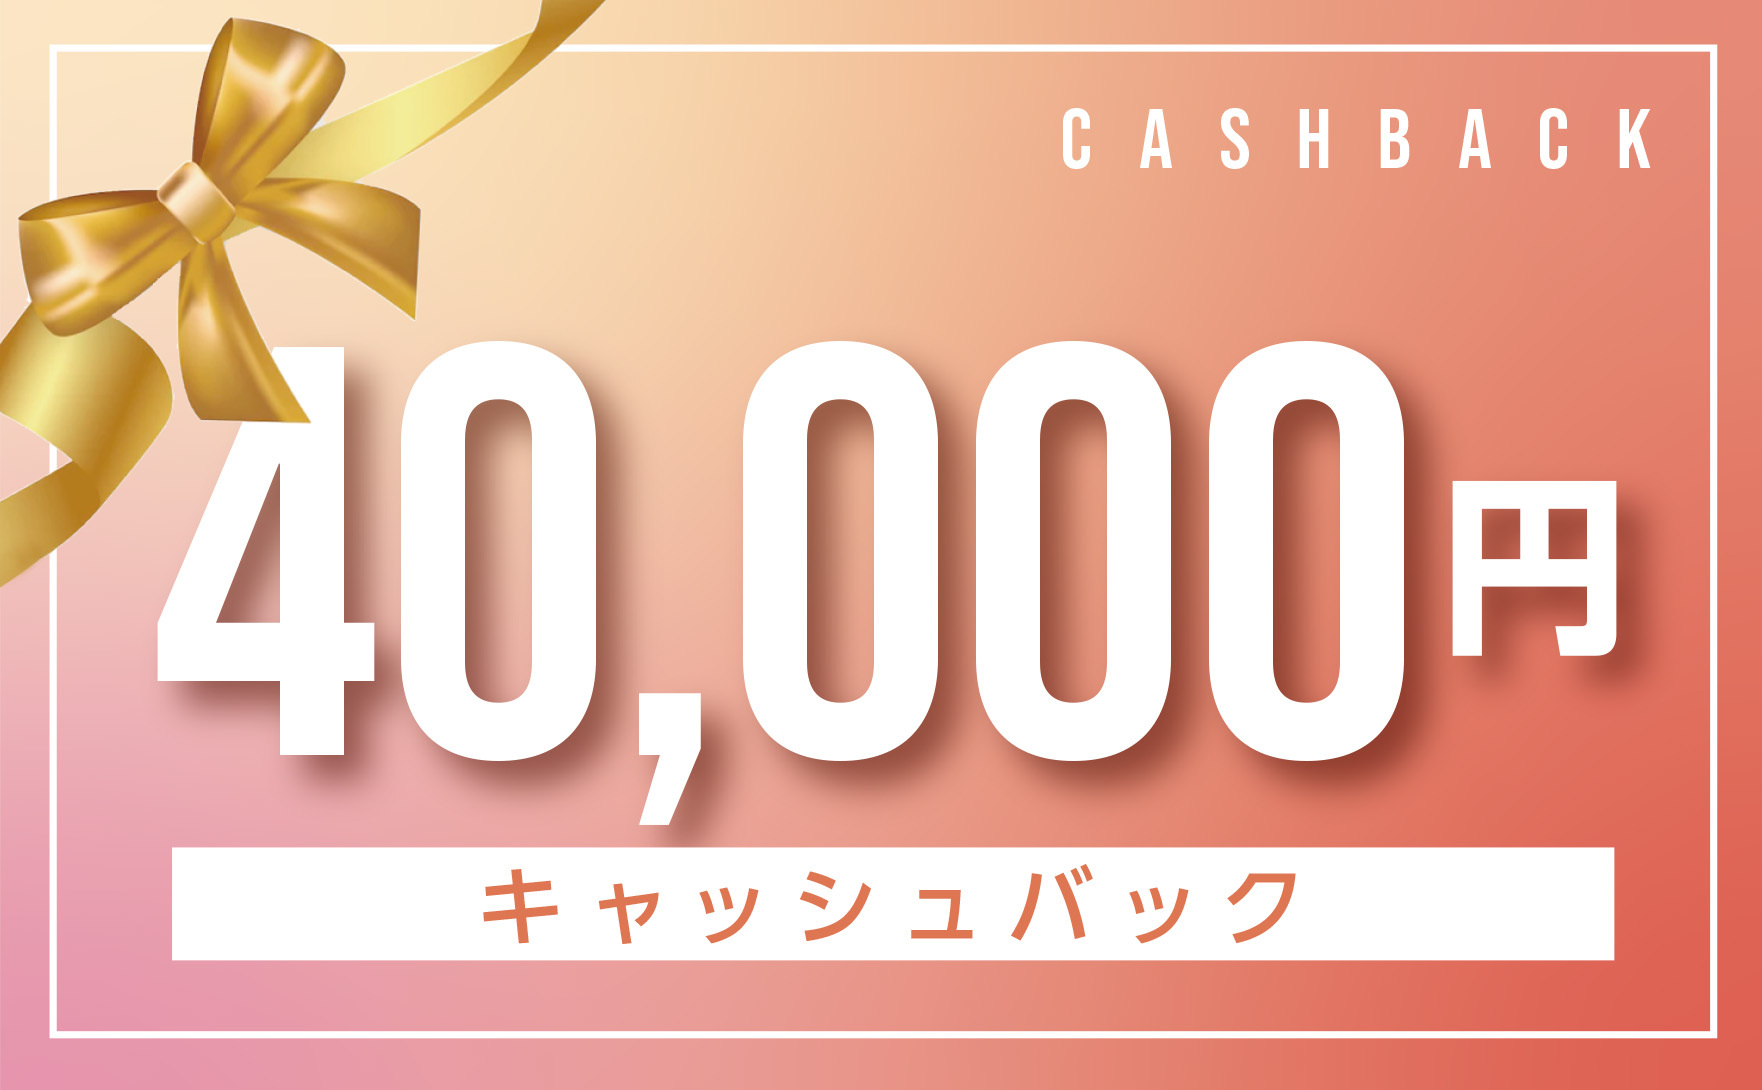 Cashback promotion of 40,000 yen for Transport expenses